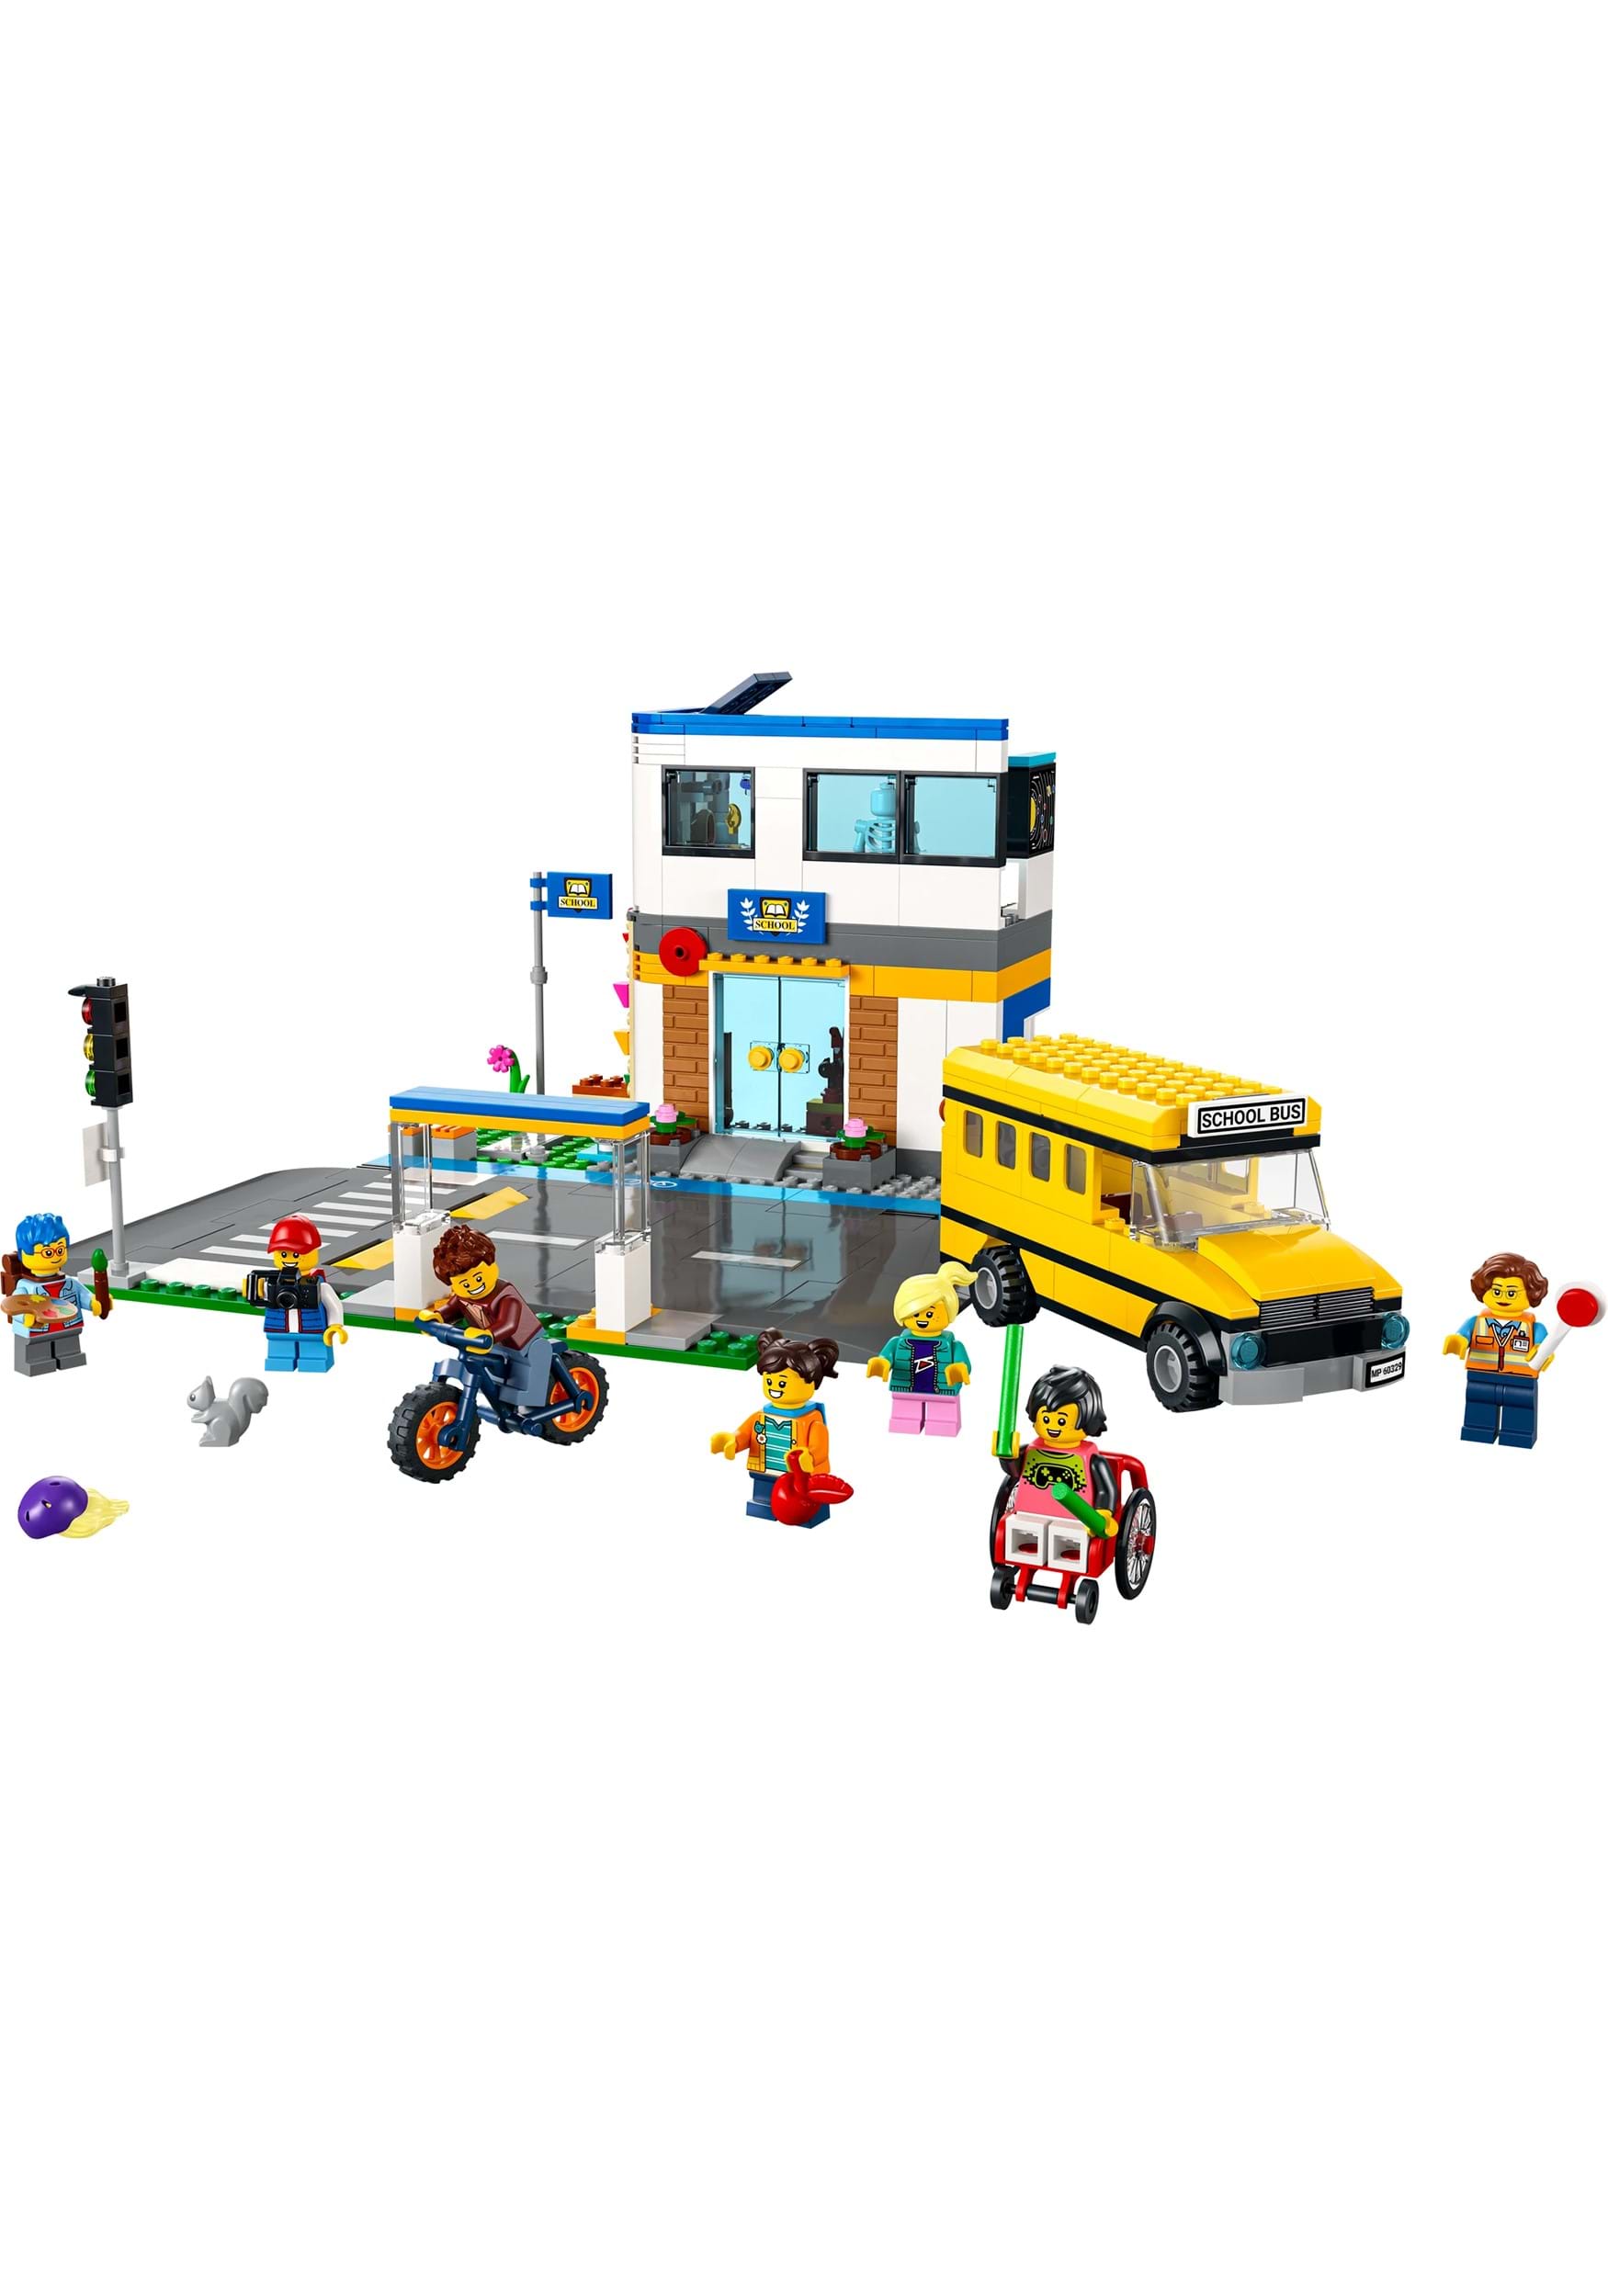 LEGO City School Day Building Kit